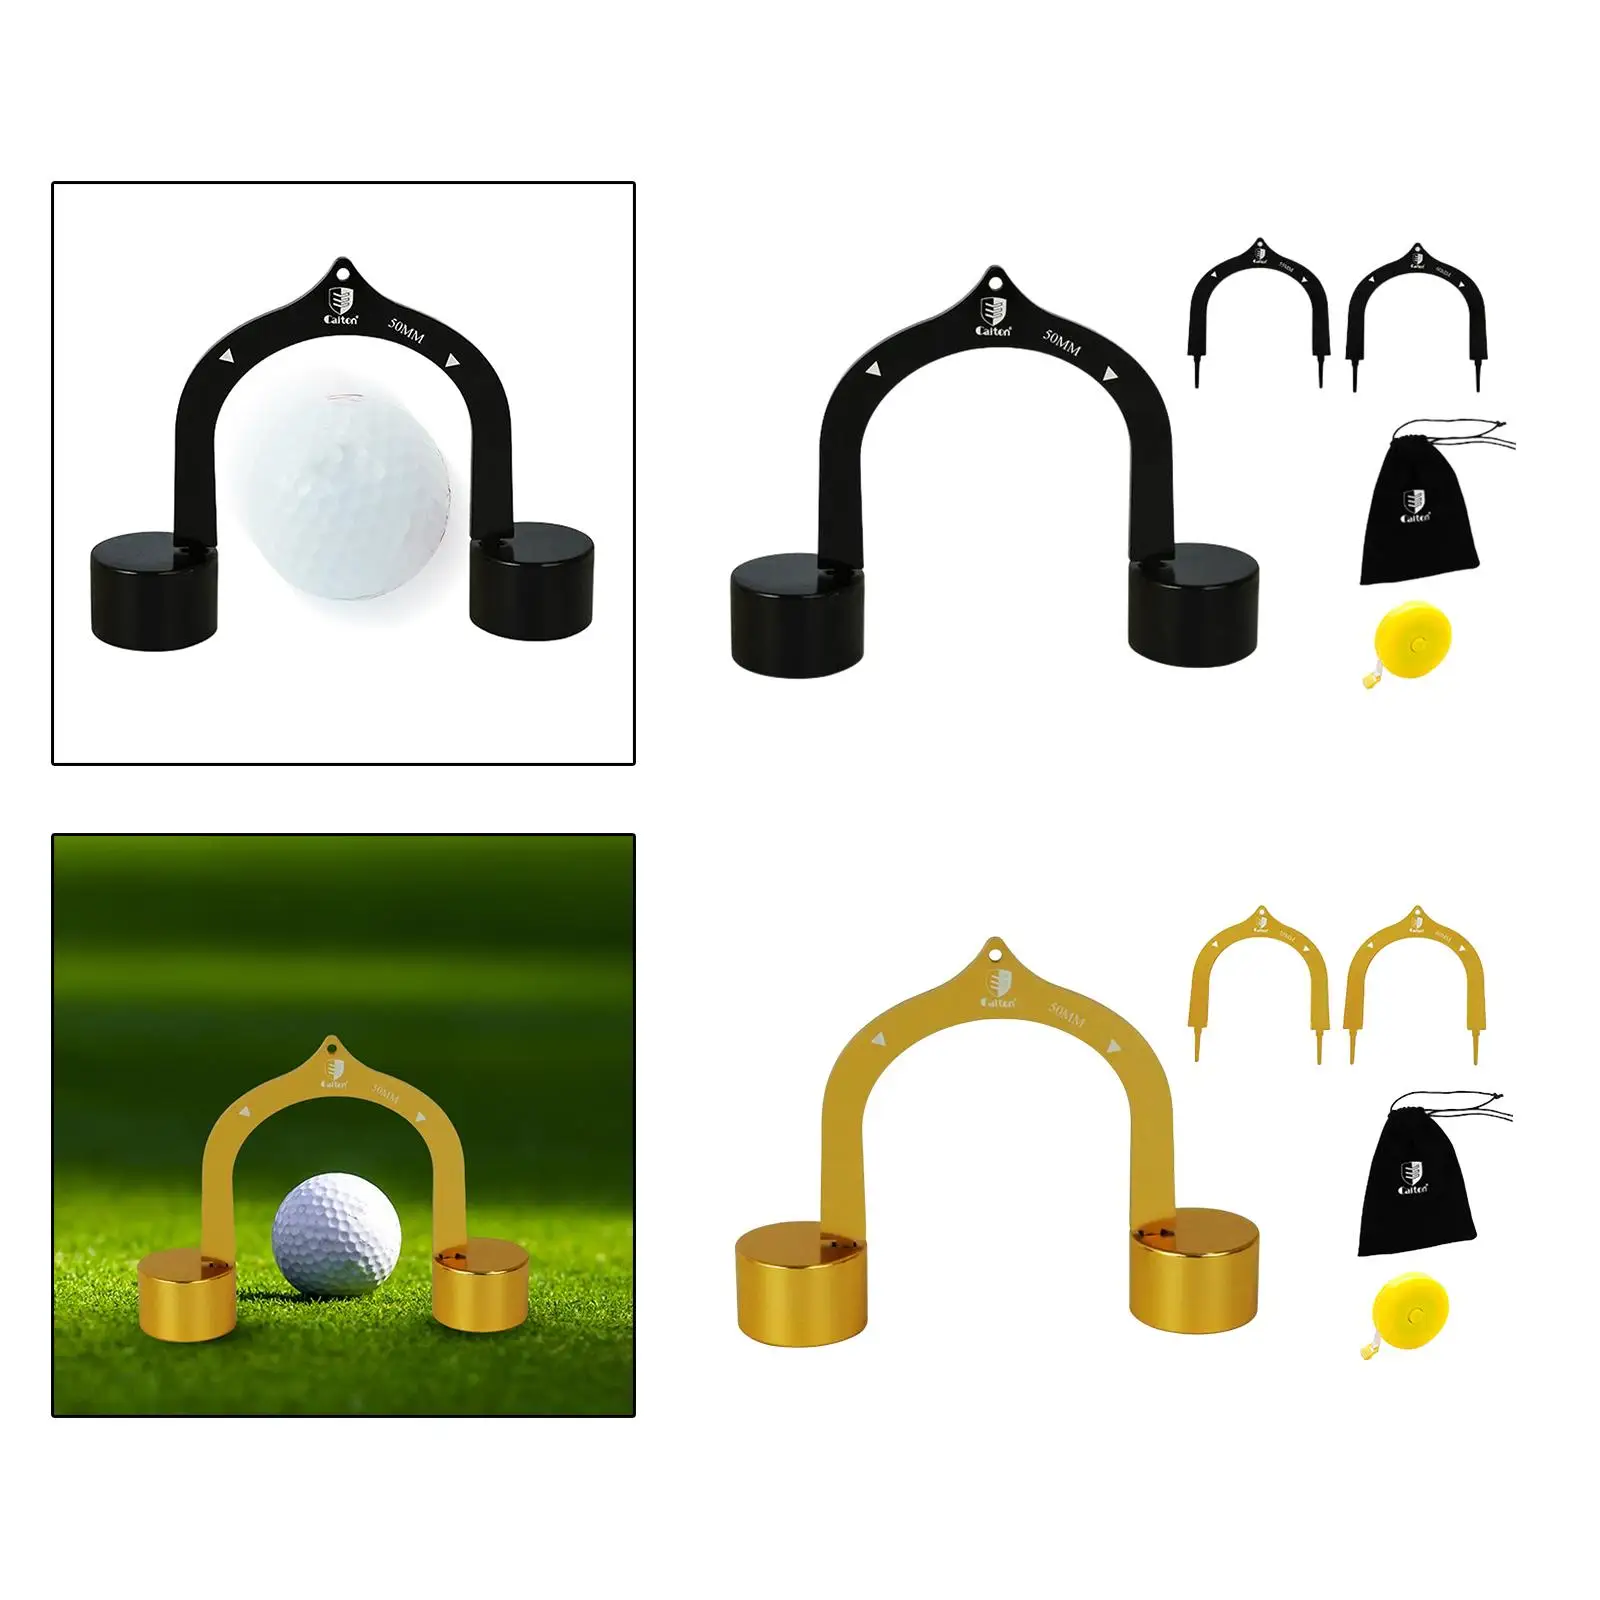 Golf Putting Gates Golf Training Aid Putter Target Metal Golf Accessories